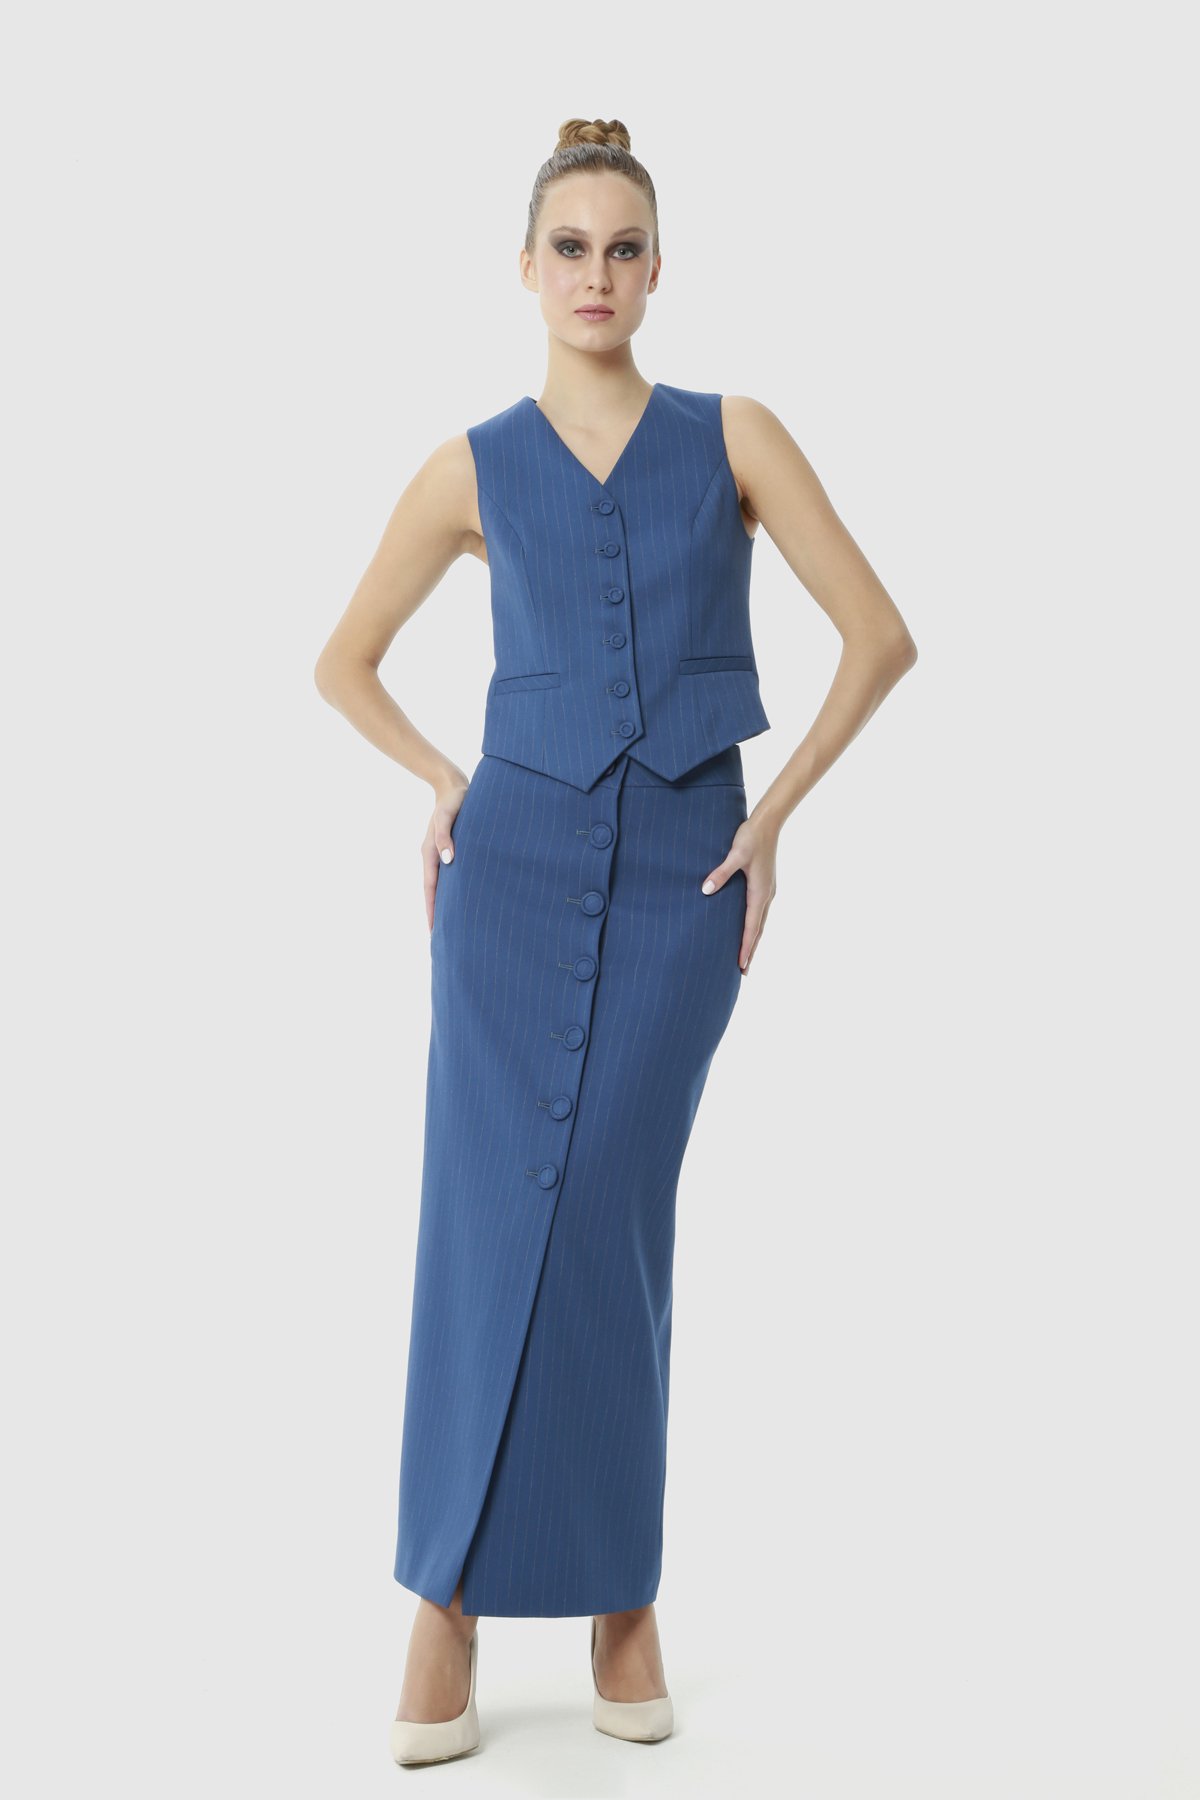 Fashion Women Navy Blue Turkey Skirt Suit price from jumia in Kenya -  Yaoota!